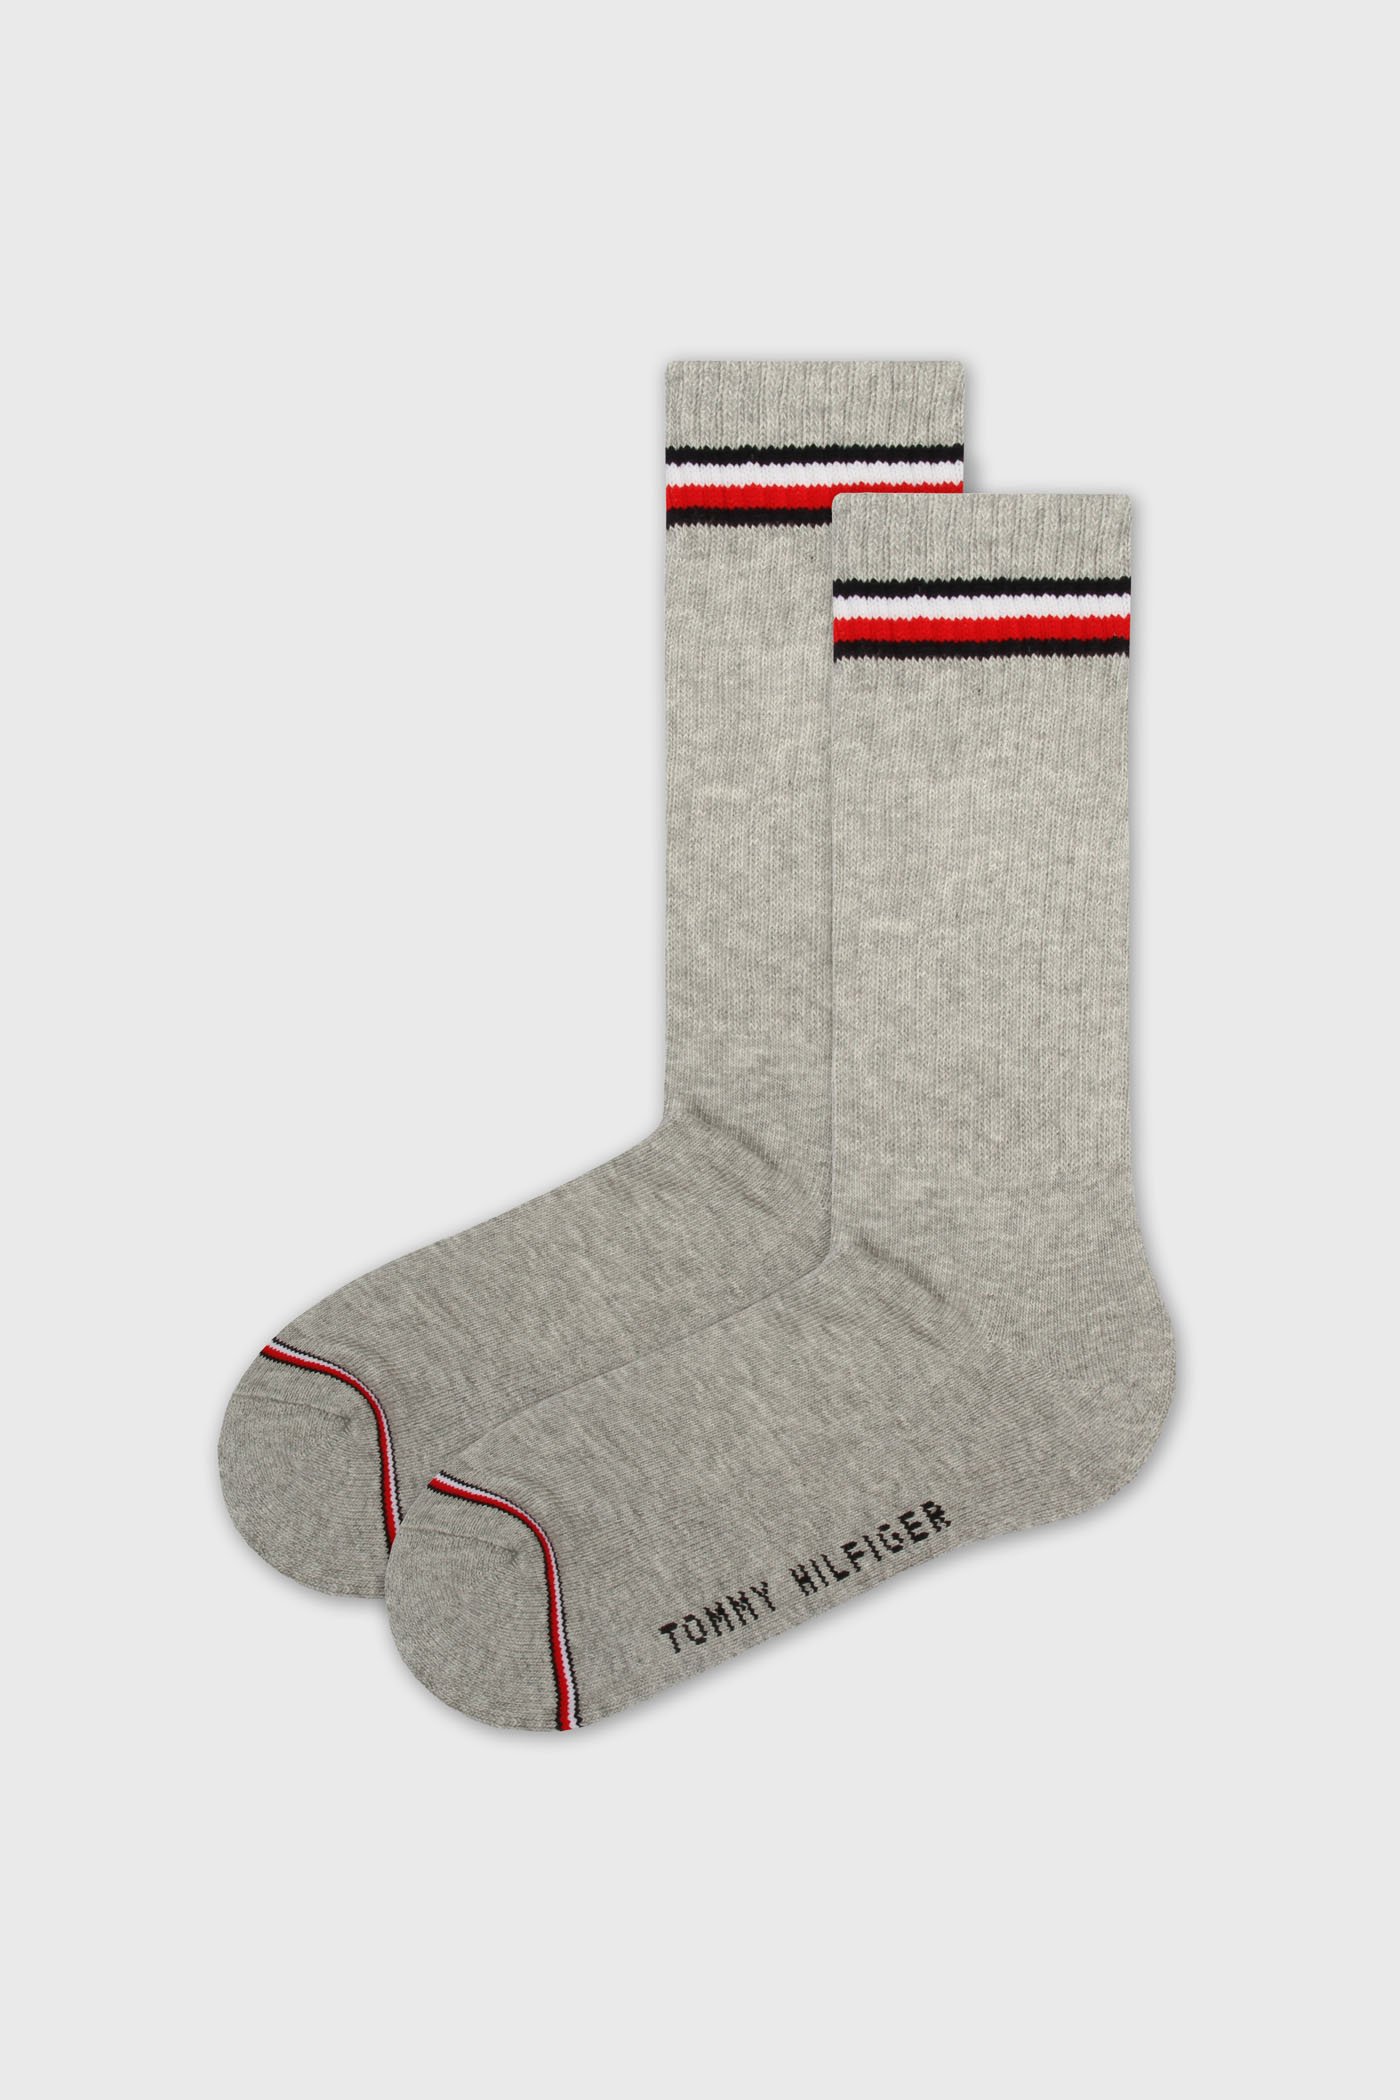 2 PACK vysokých ponožek Tommy Hilfiger Iconic Original | Astratex.cz